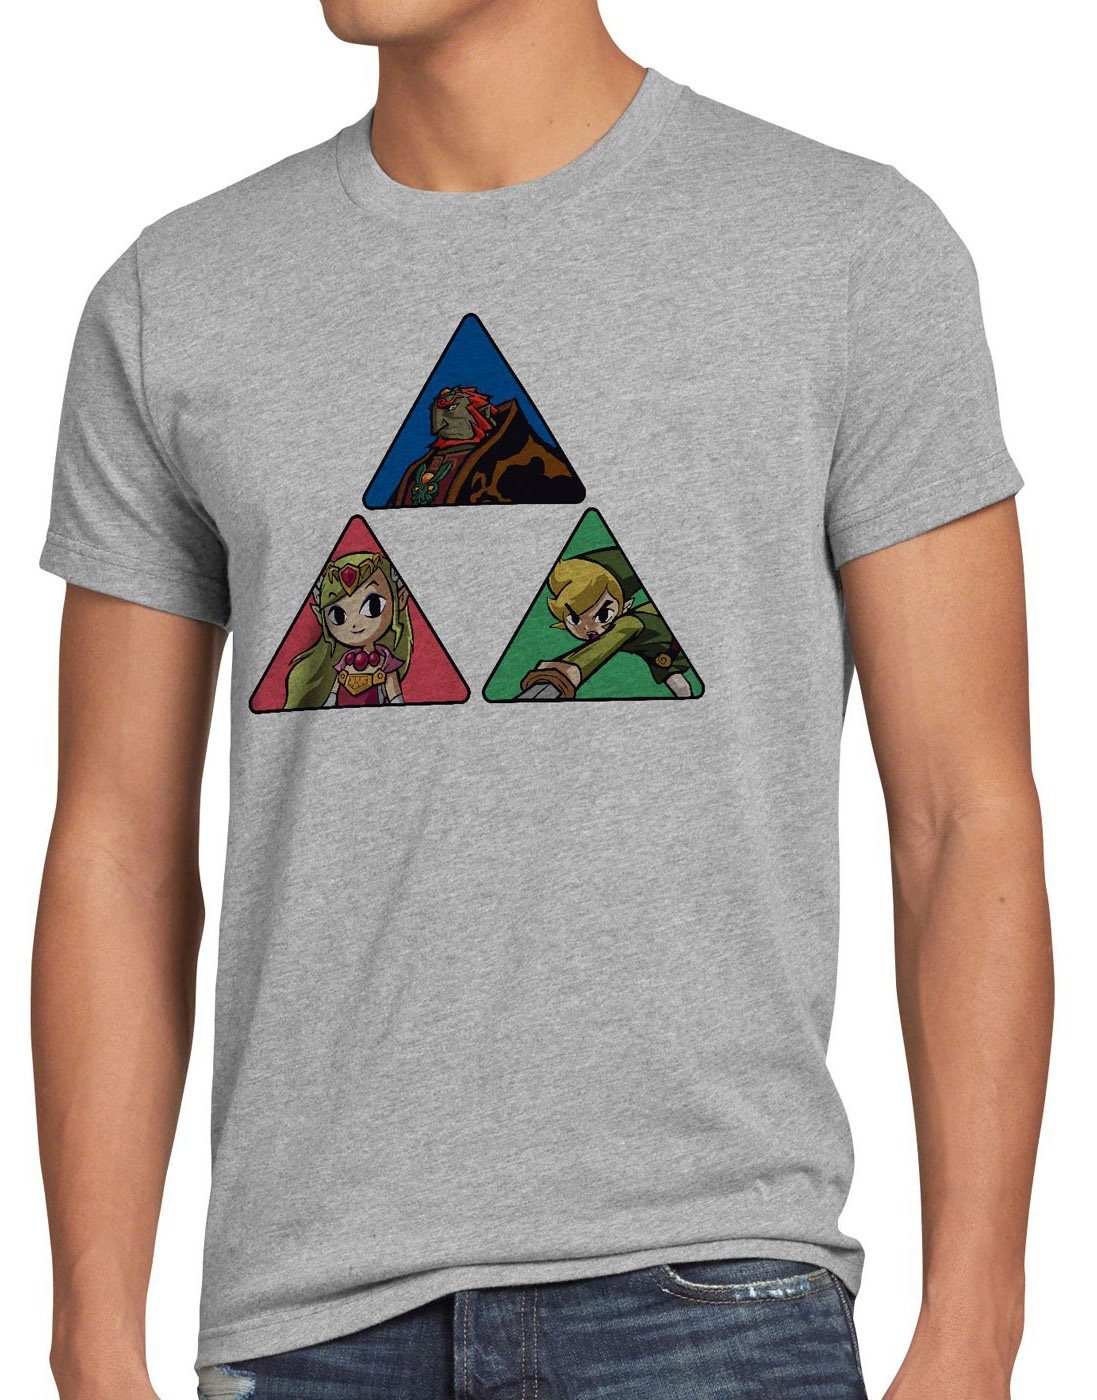 style3 Link Herren T-Shirt Triforce boy grau game breath of legend meliert zelda Print-Shirt Gamer wild Hyrule